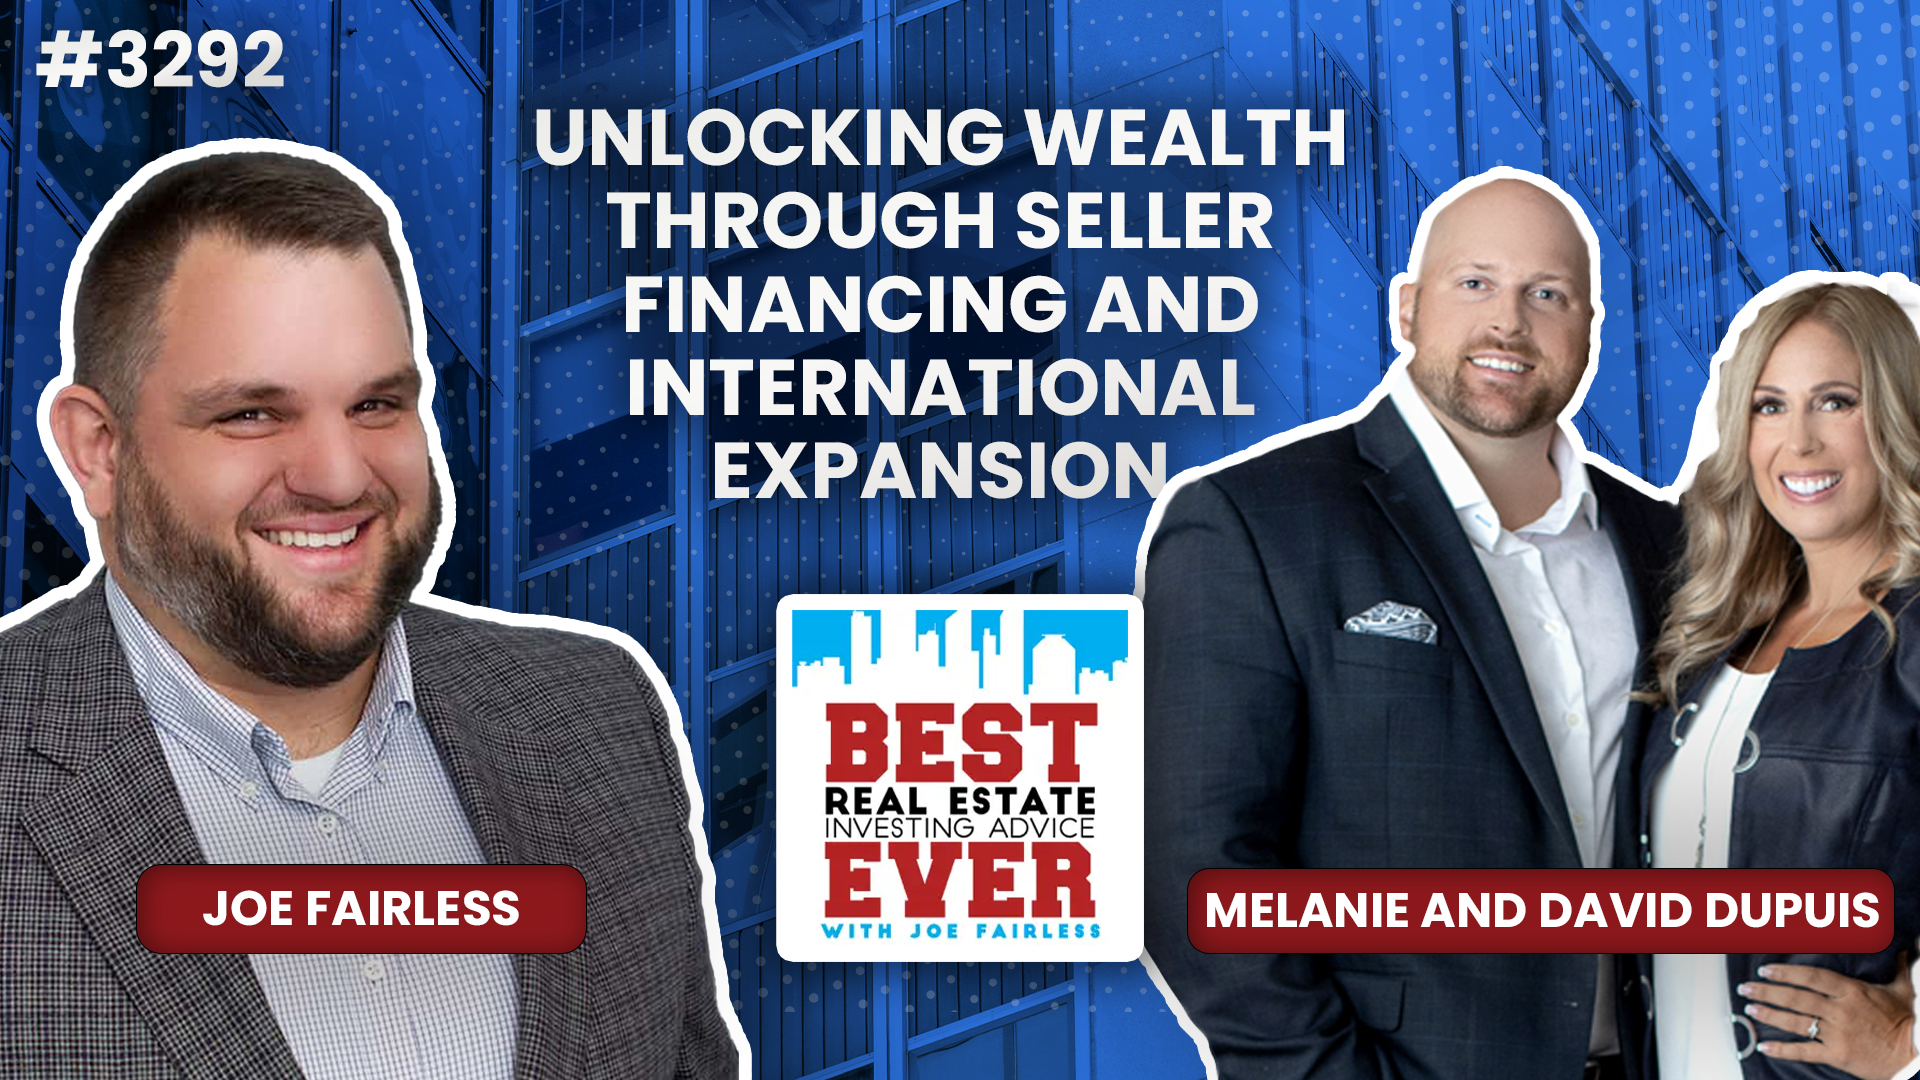 JF3292: Melanie and David Dupuis - Unlocking Wealth Through Seller Financing and International Expansion